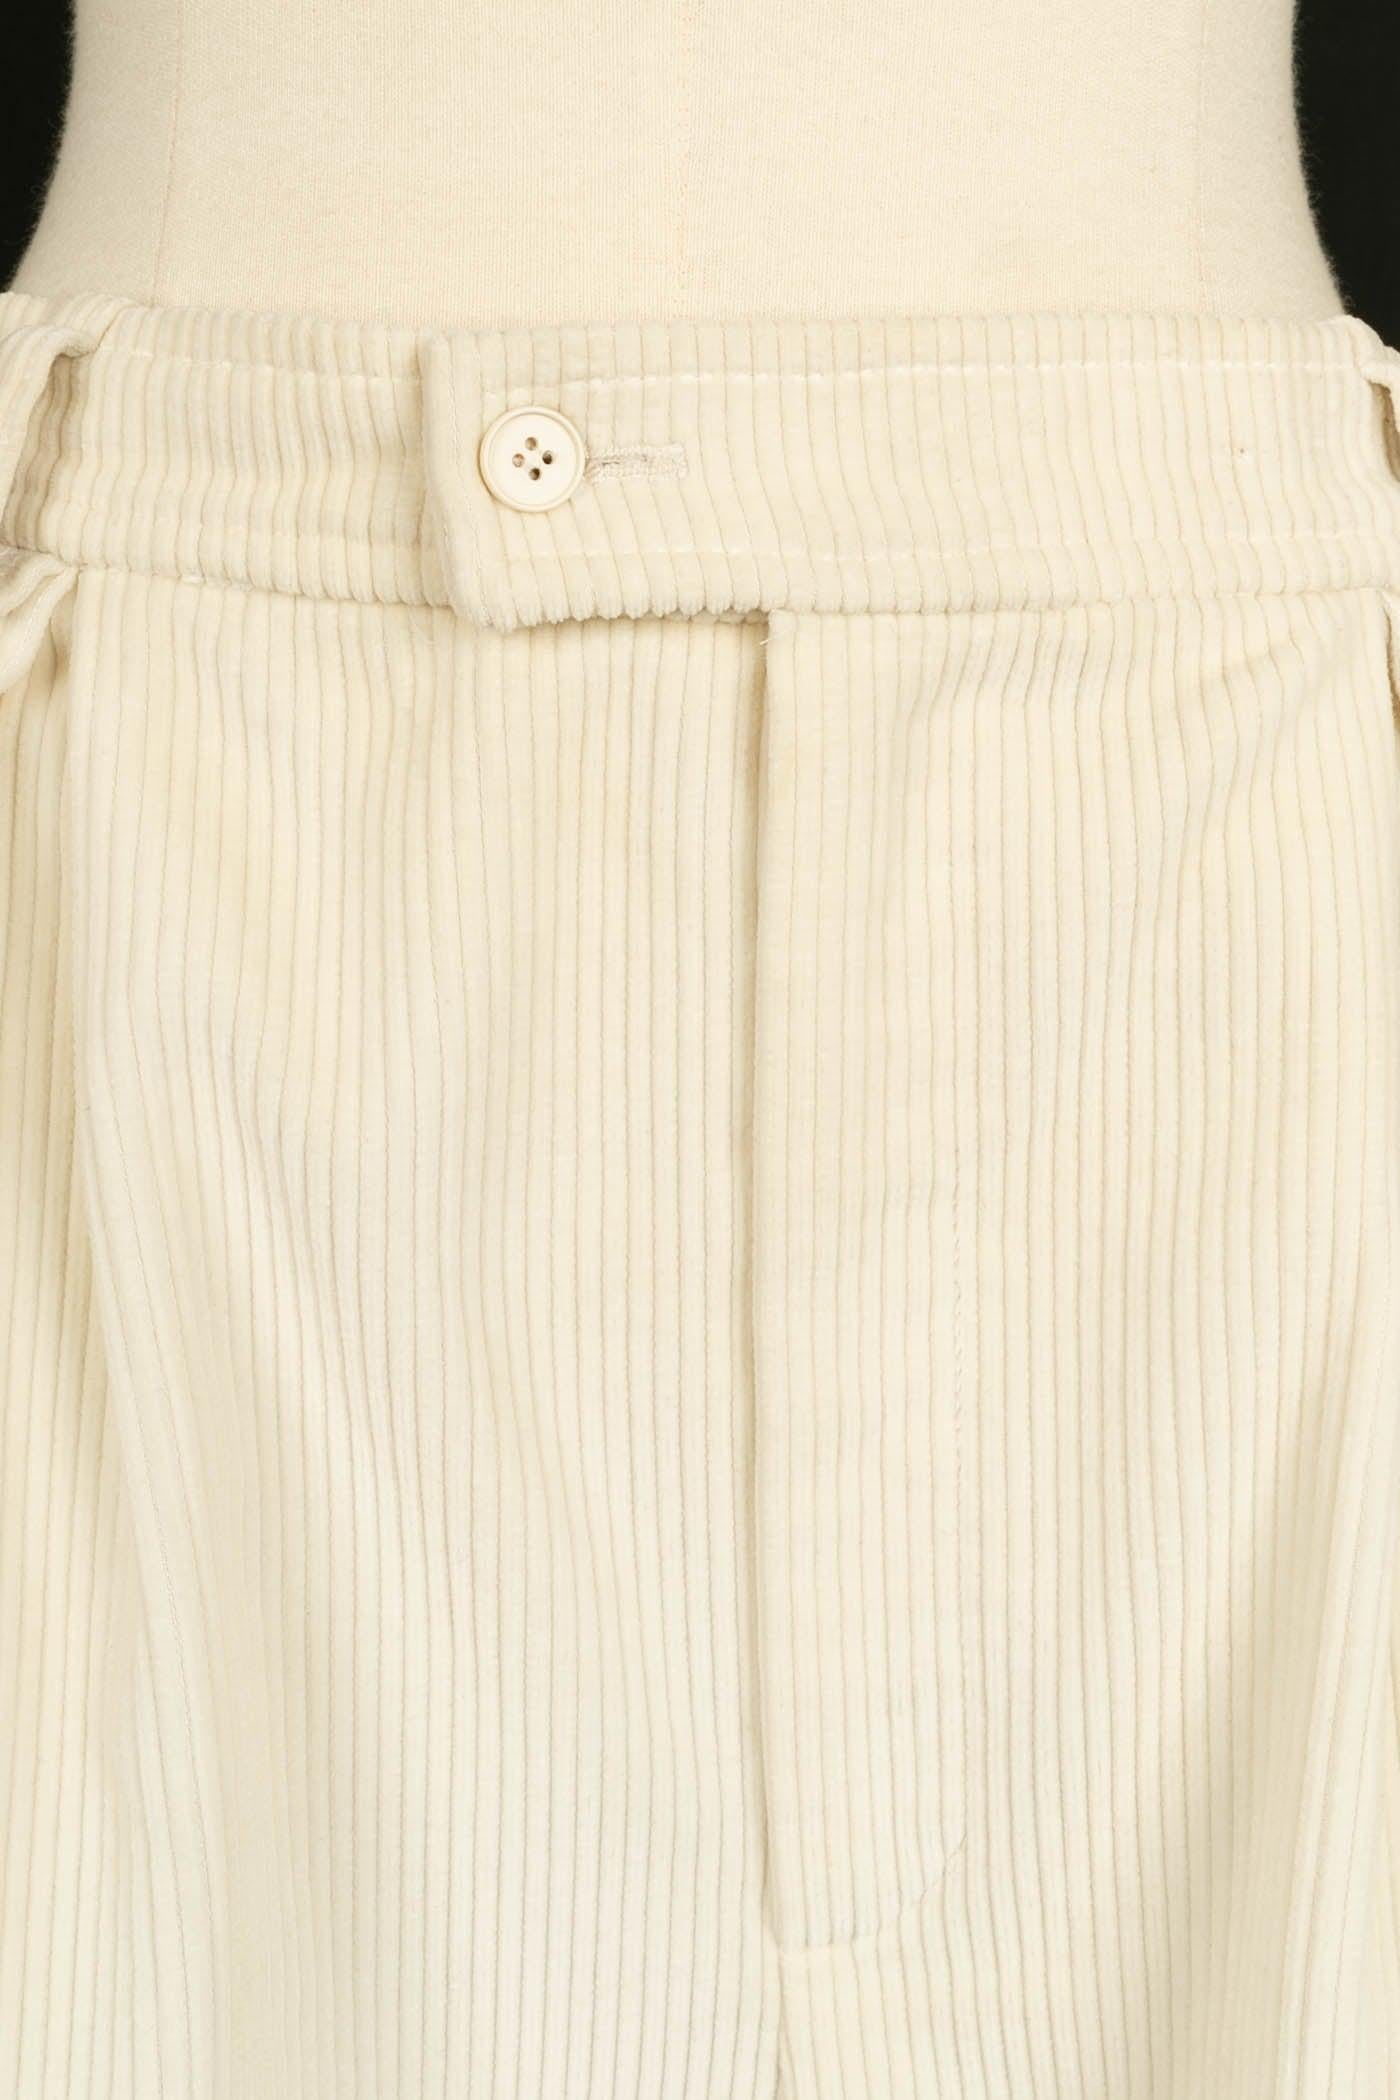 Yves Saint Laurent Off White Corduroy Pants, Size 36FR 8